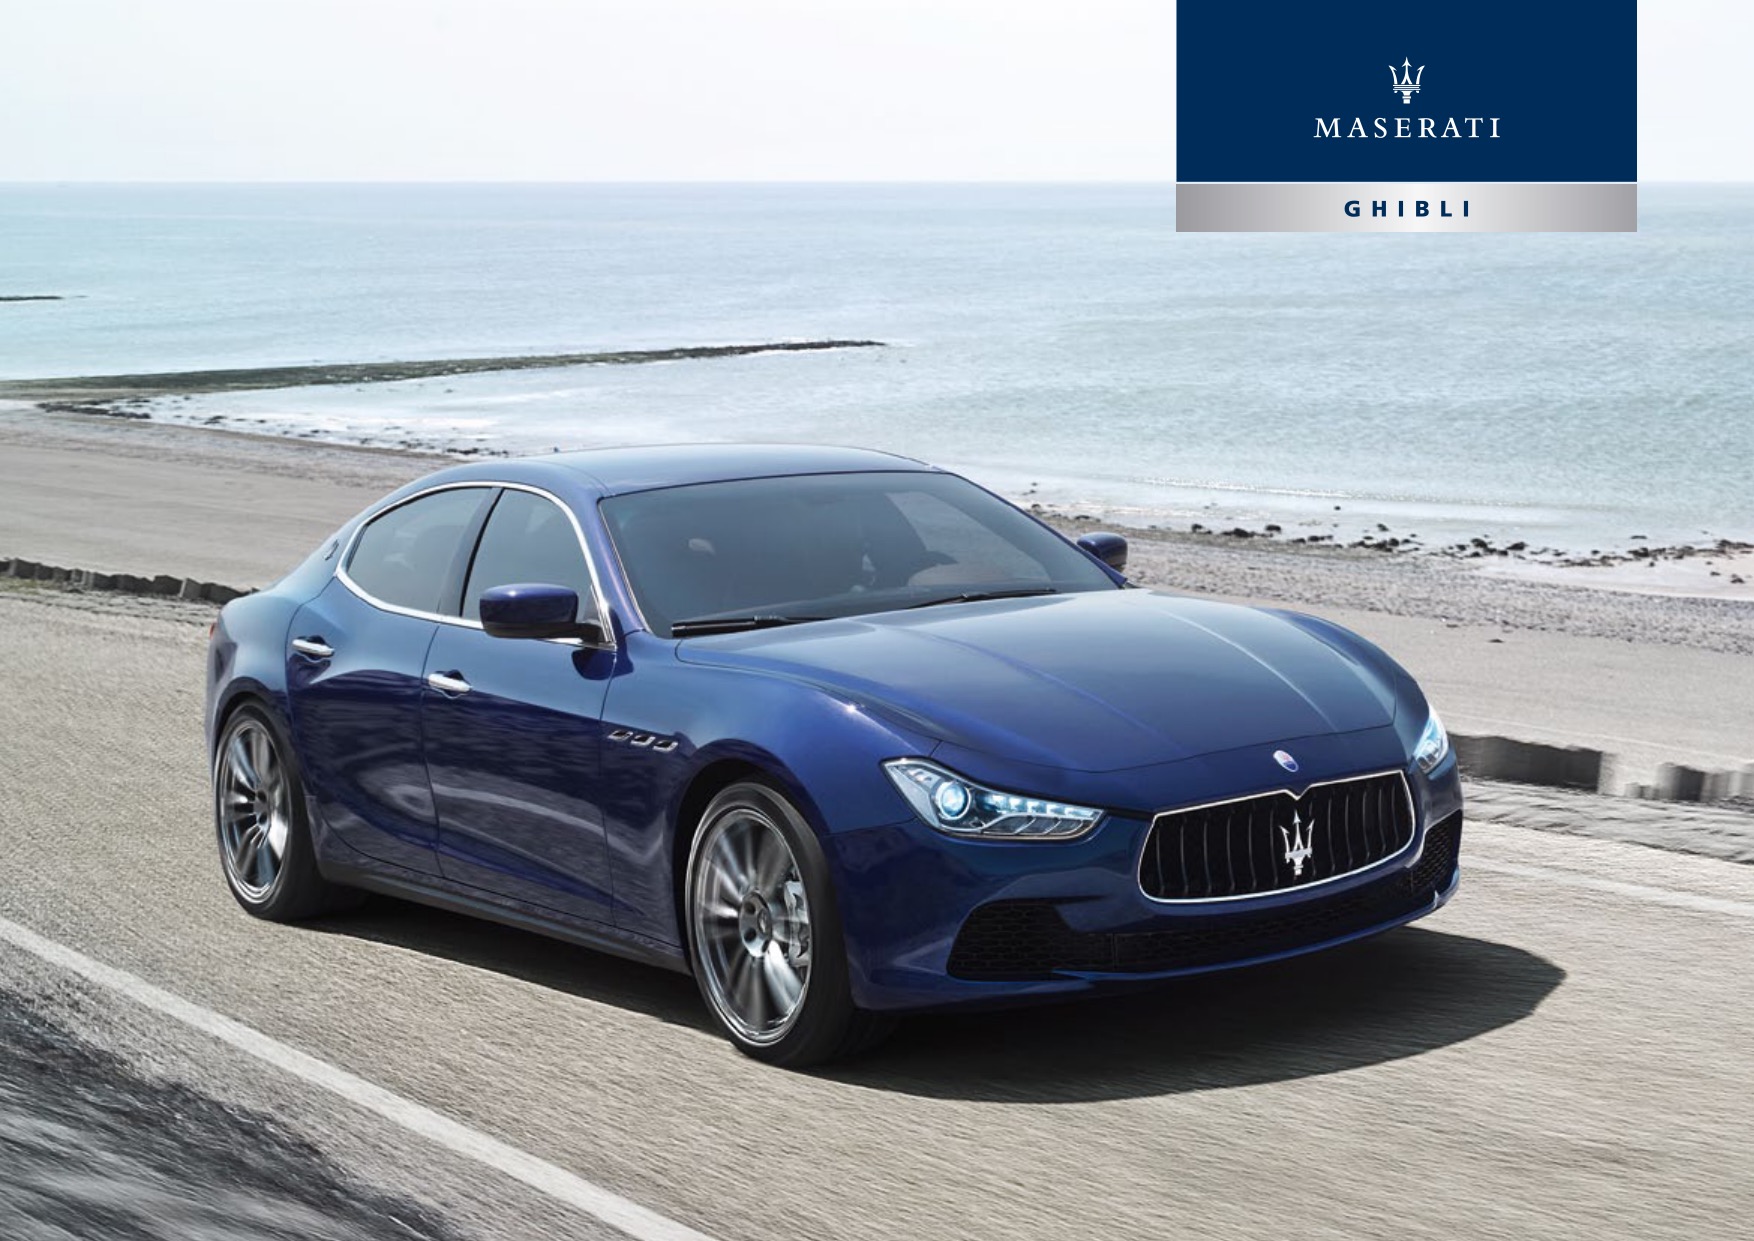 2015 Maserati Ghibli Brochure